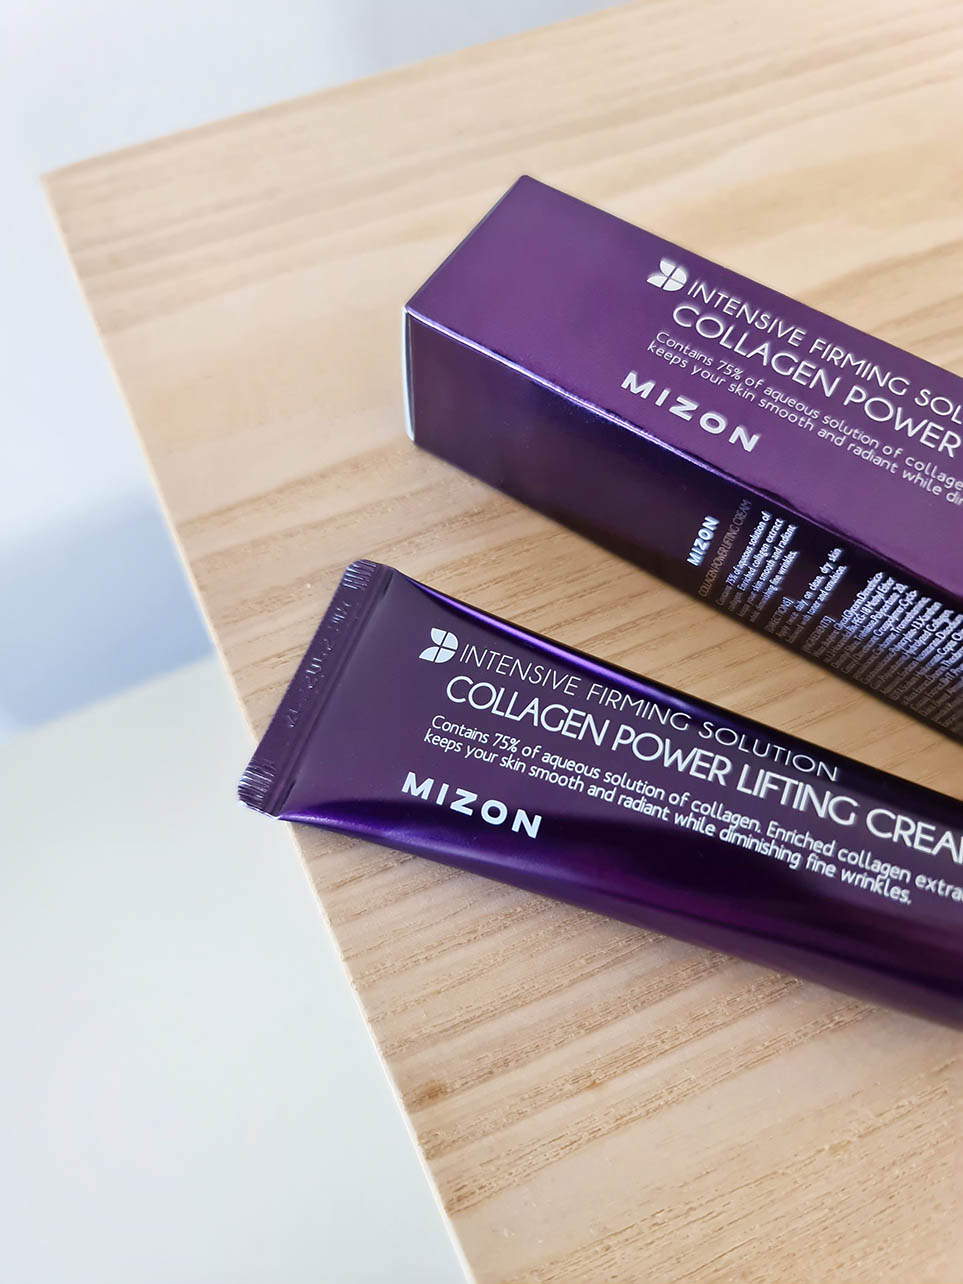 Mizon Collagen Power Lifting Cream tube